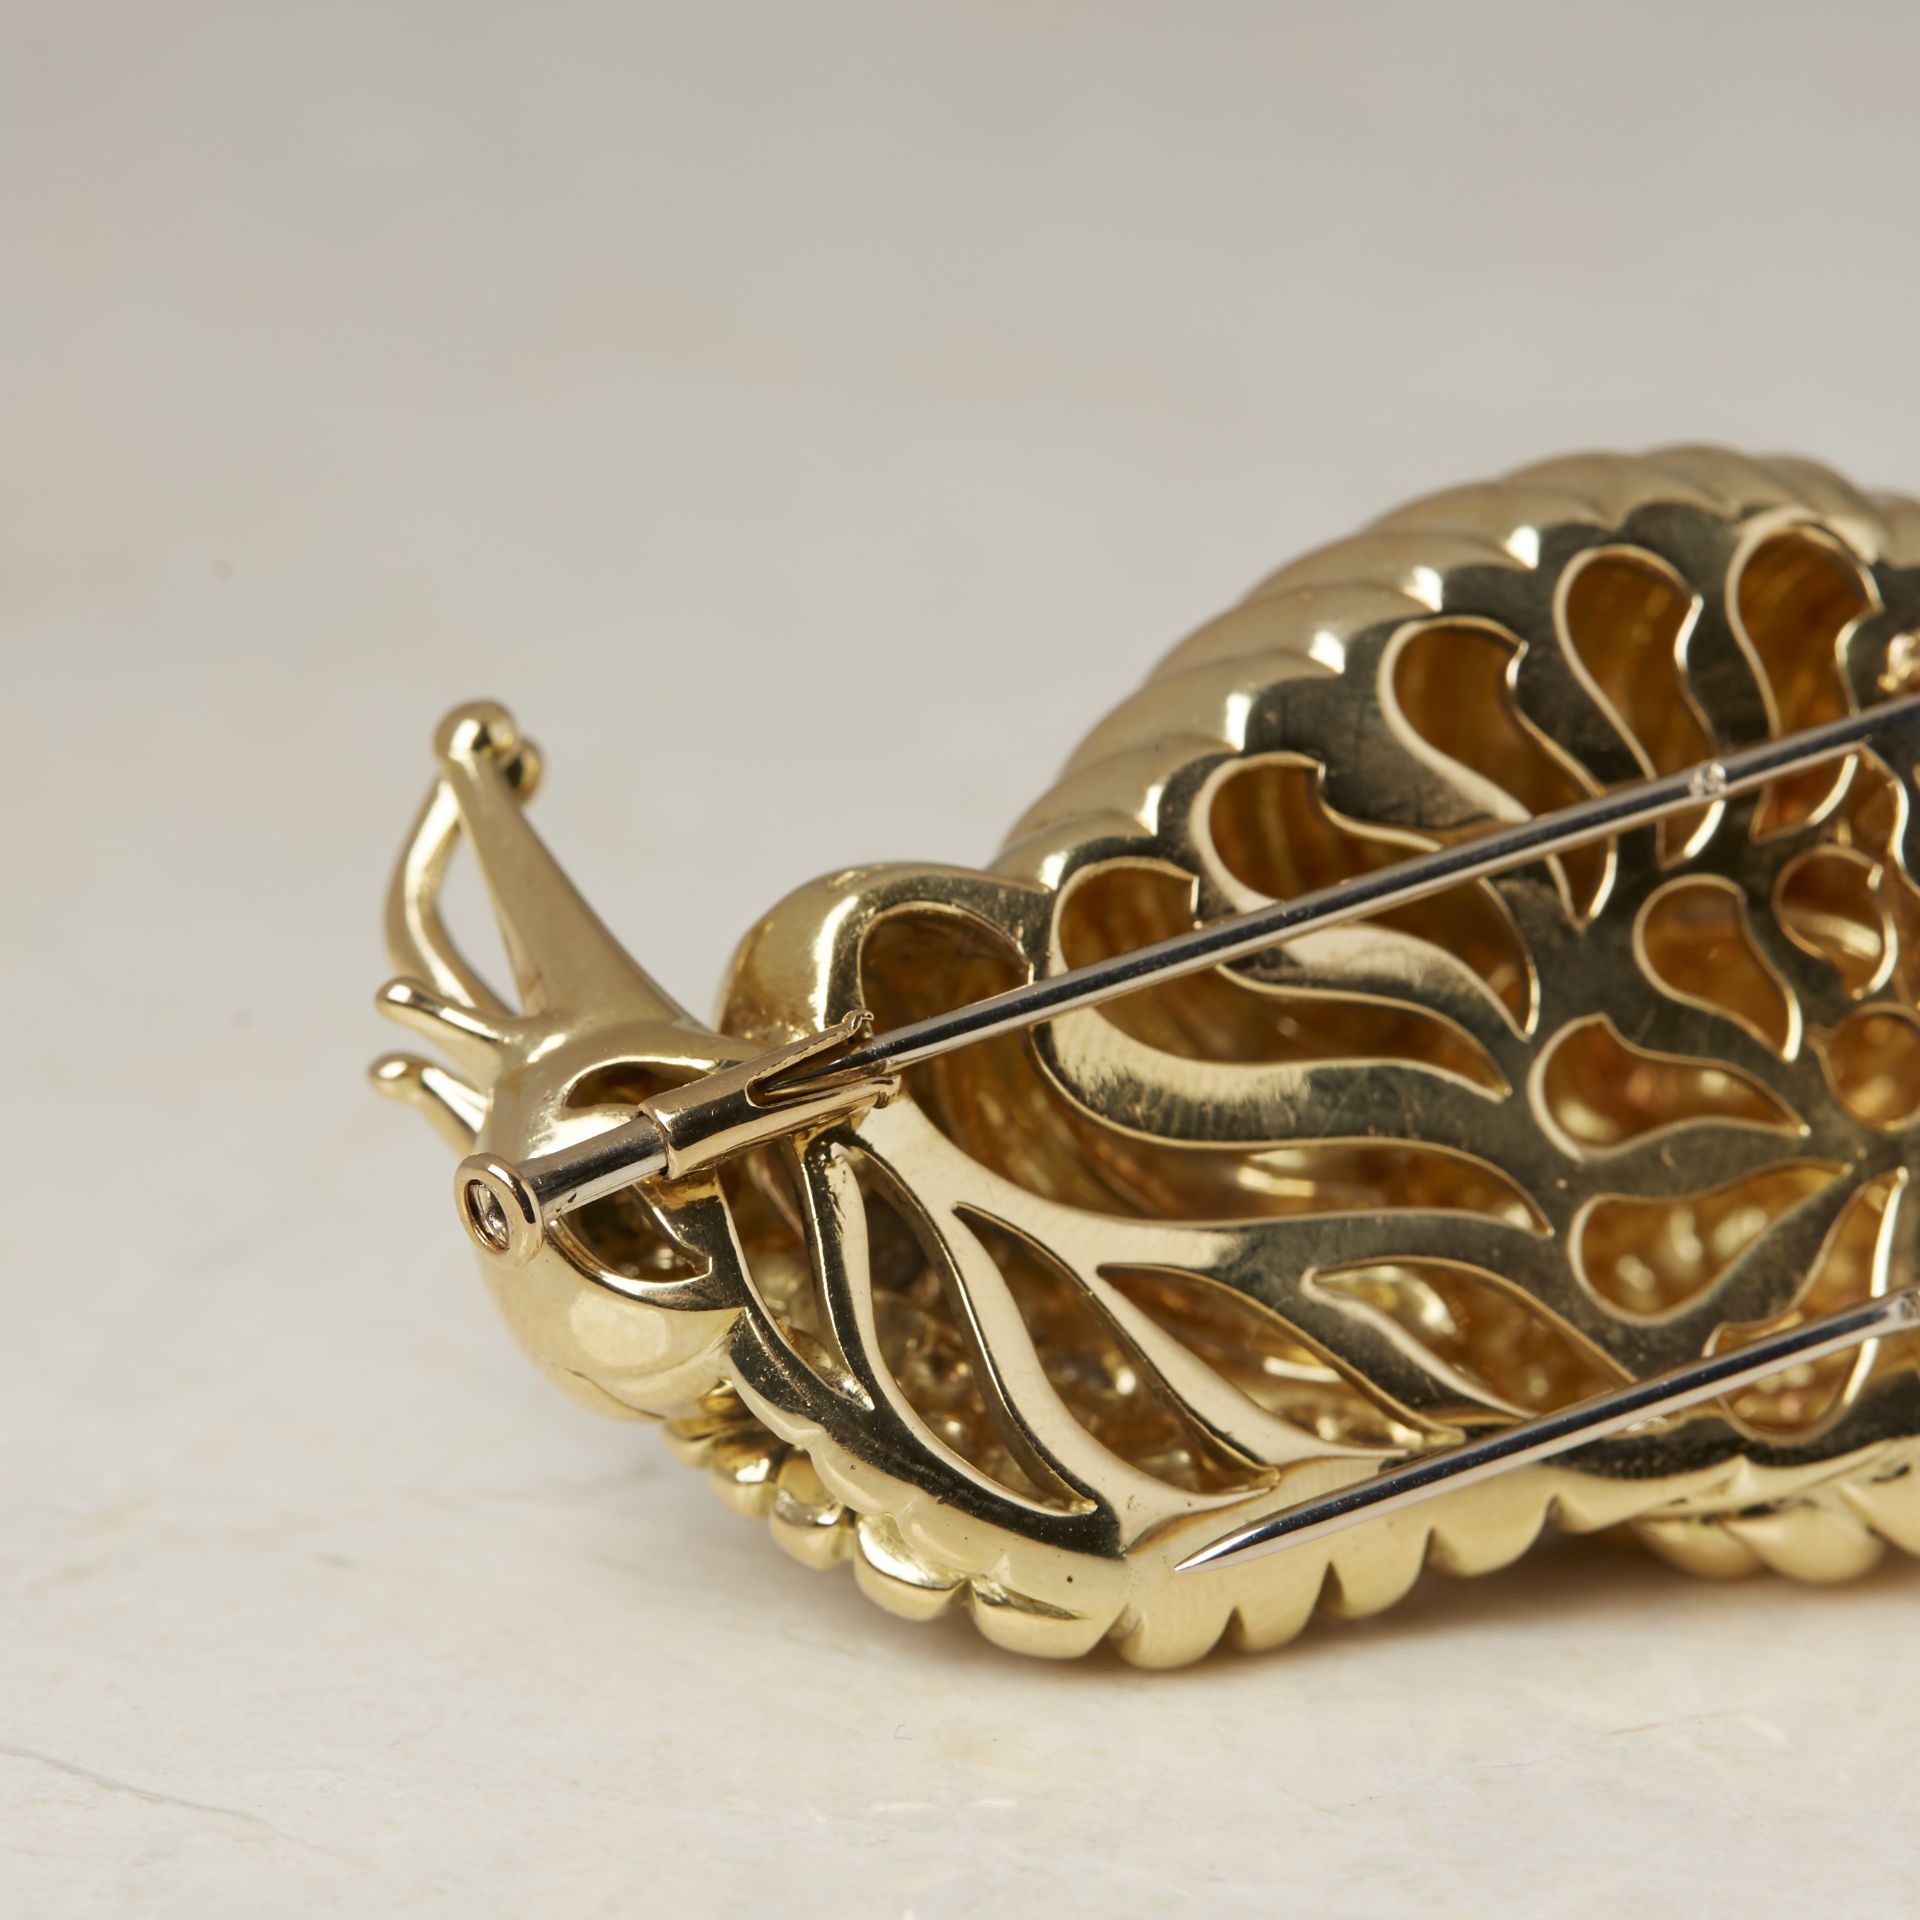 Rene Boivin 18k Yellow Gold Diamond Snail Brooch with Presentation Box - Image 12 of 19